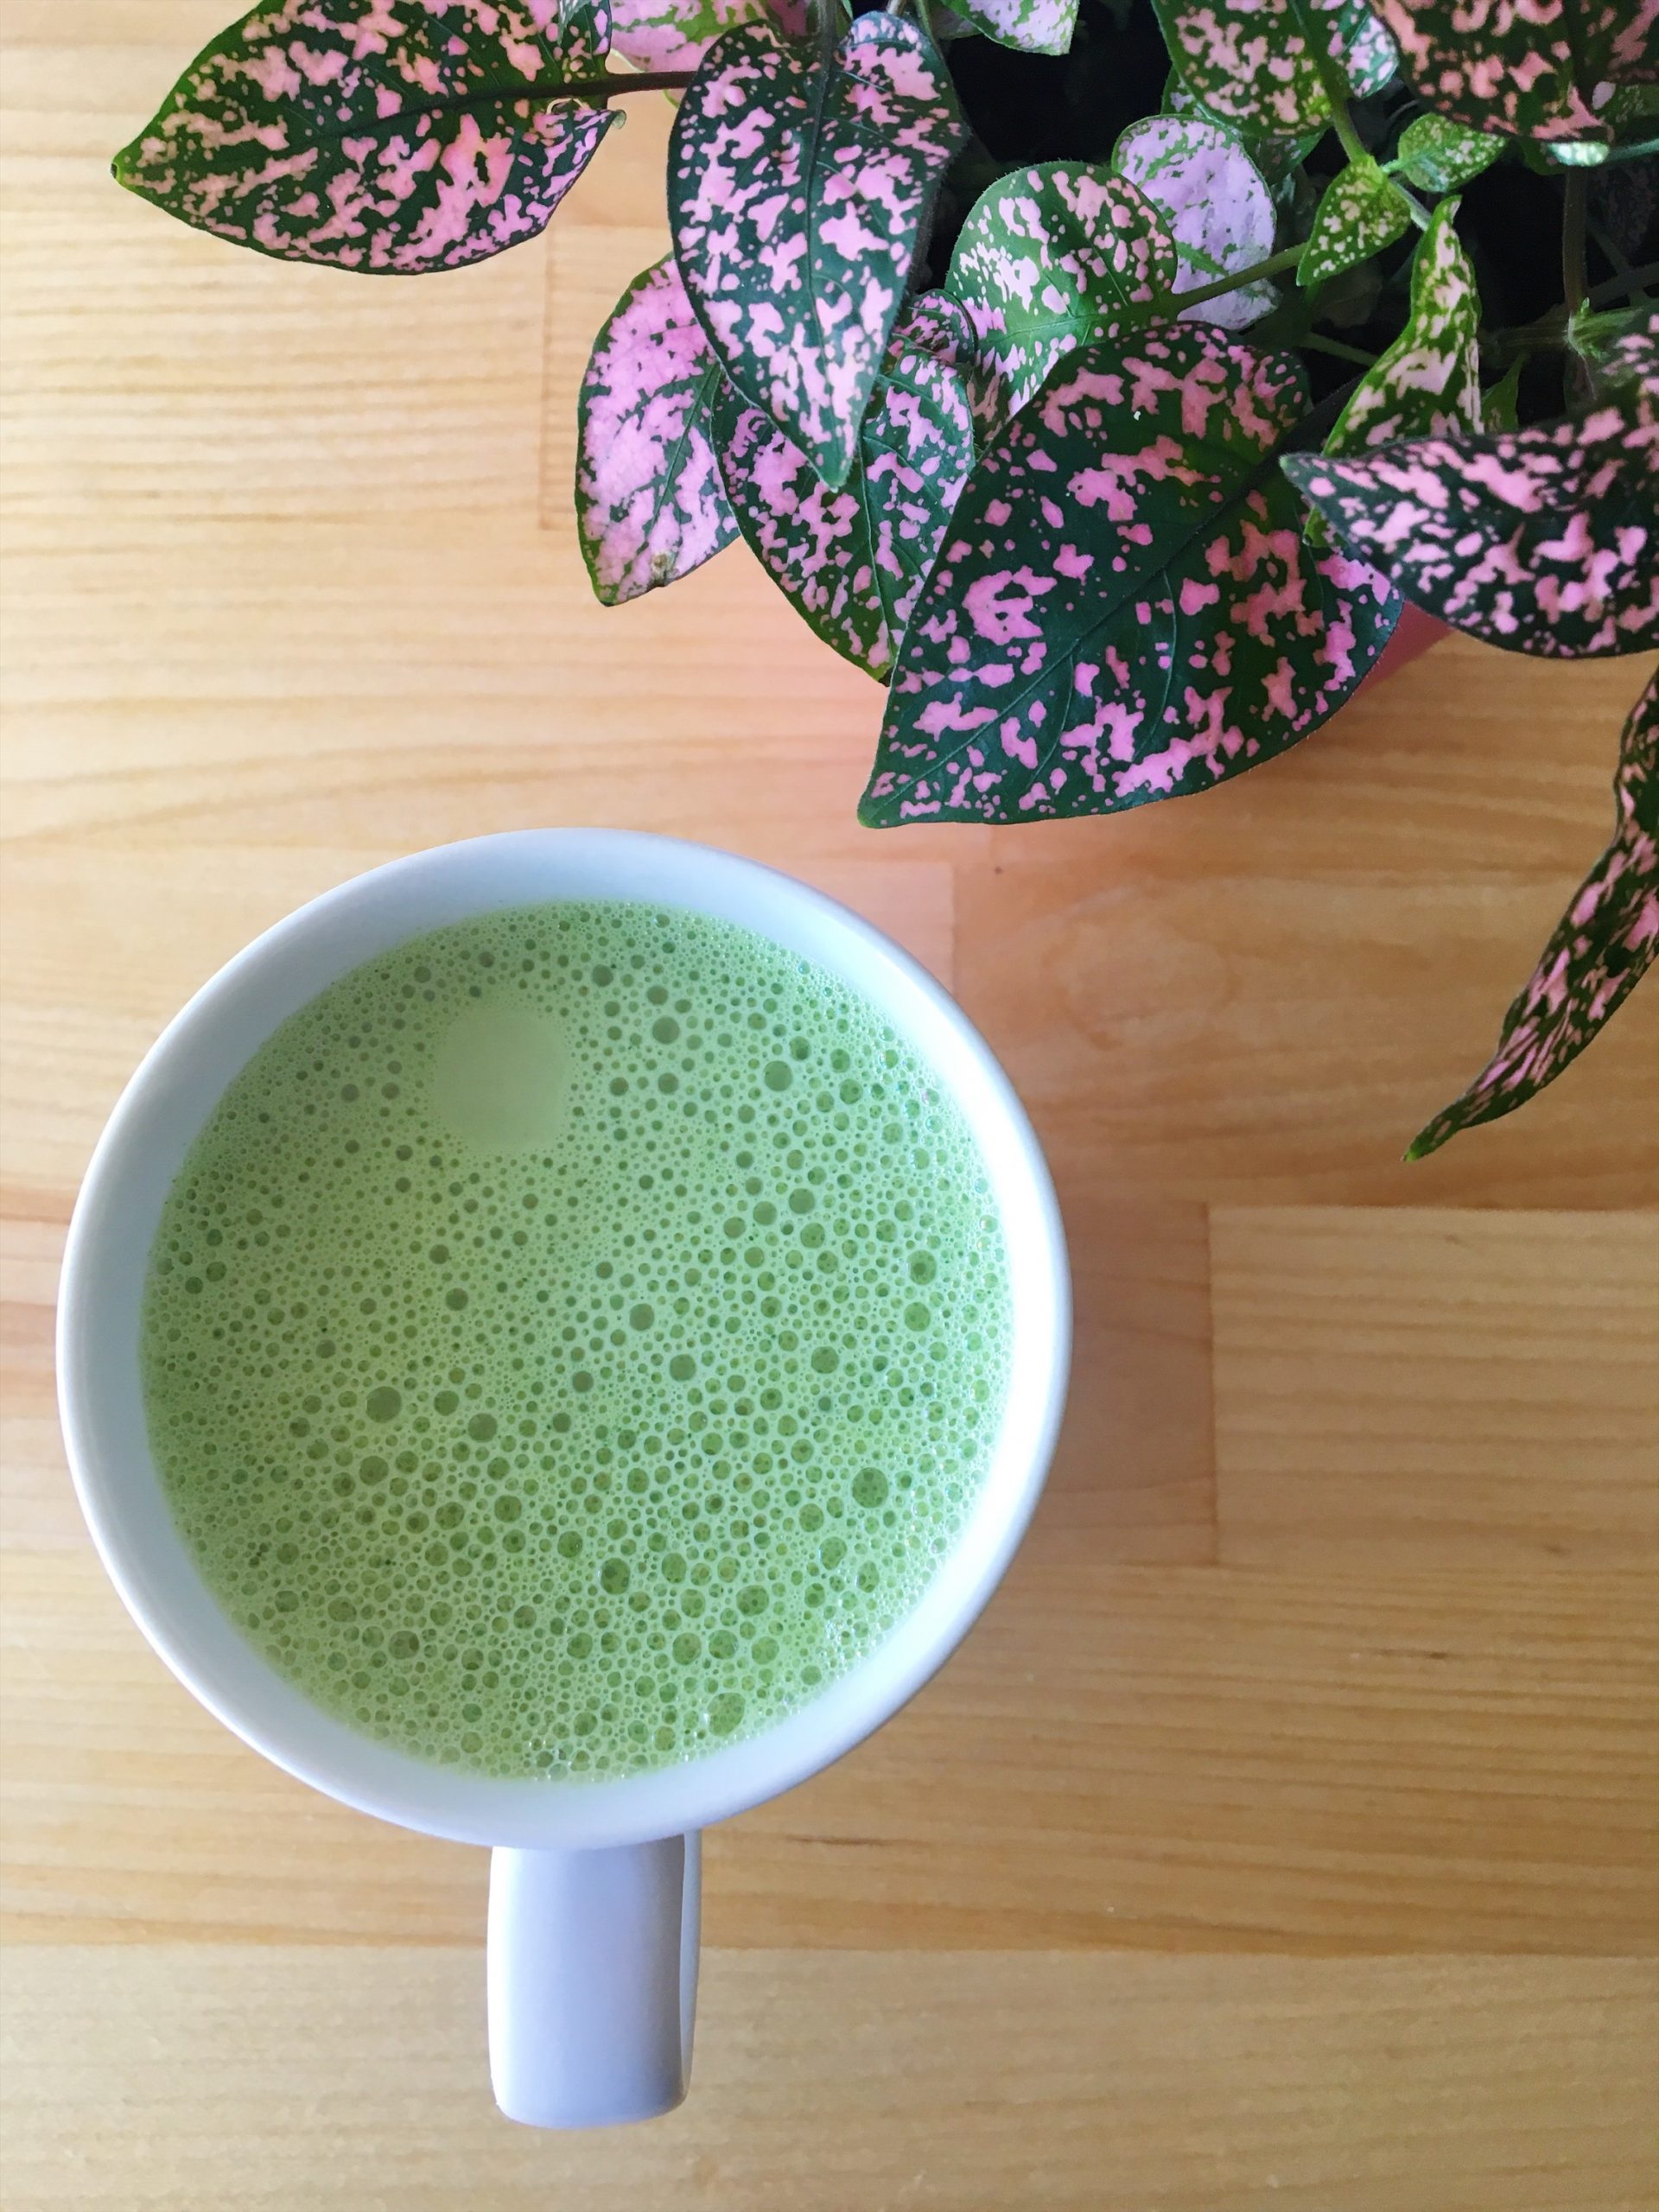 Matcha Latte 101: Make The Perfect Green Tea Latte